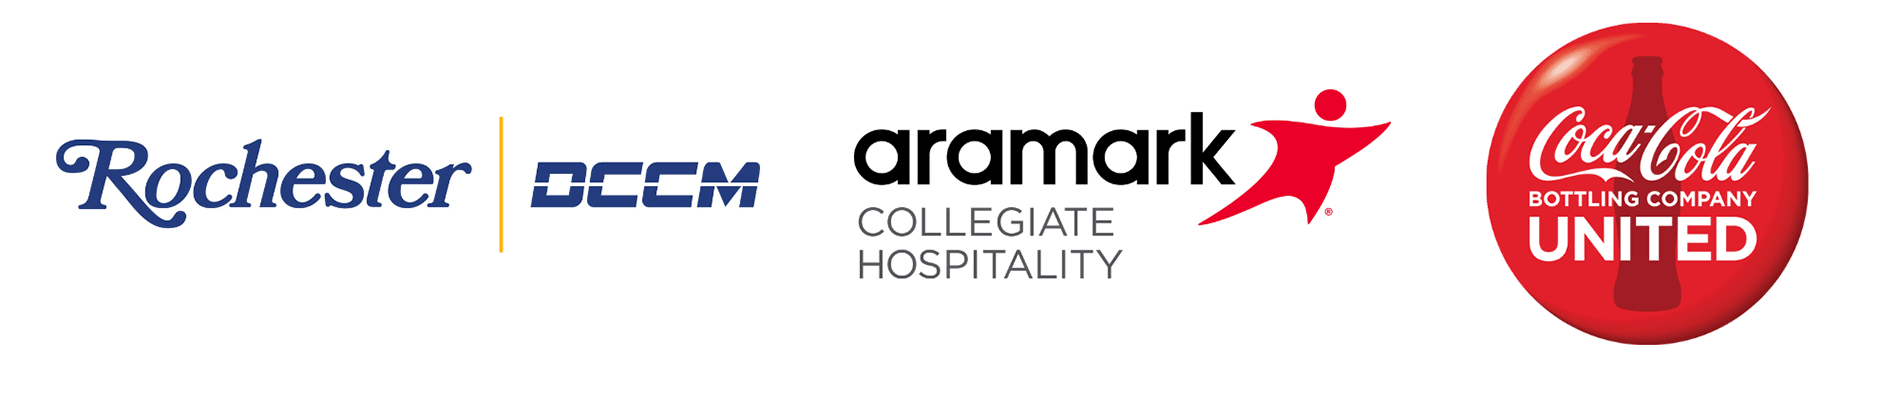 Rochester DCCM and aramark collegiate hospitality logos